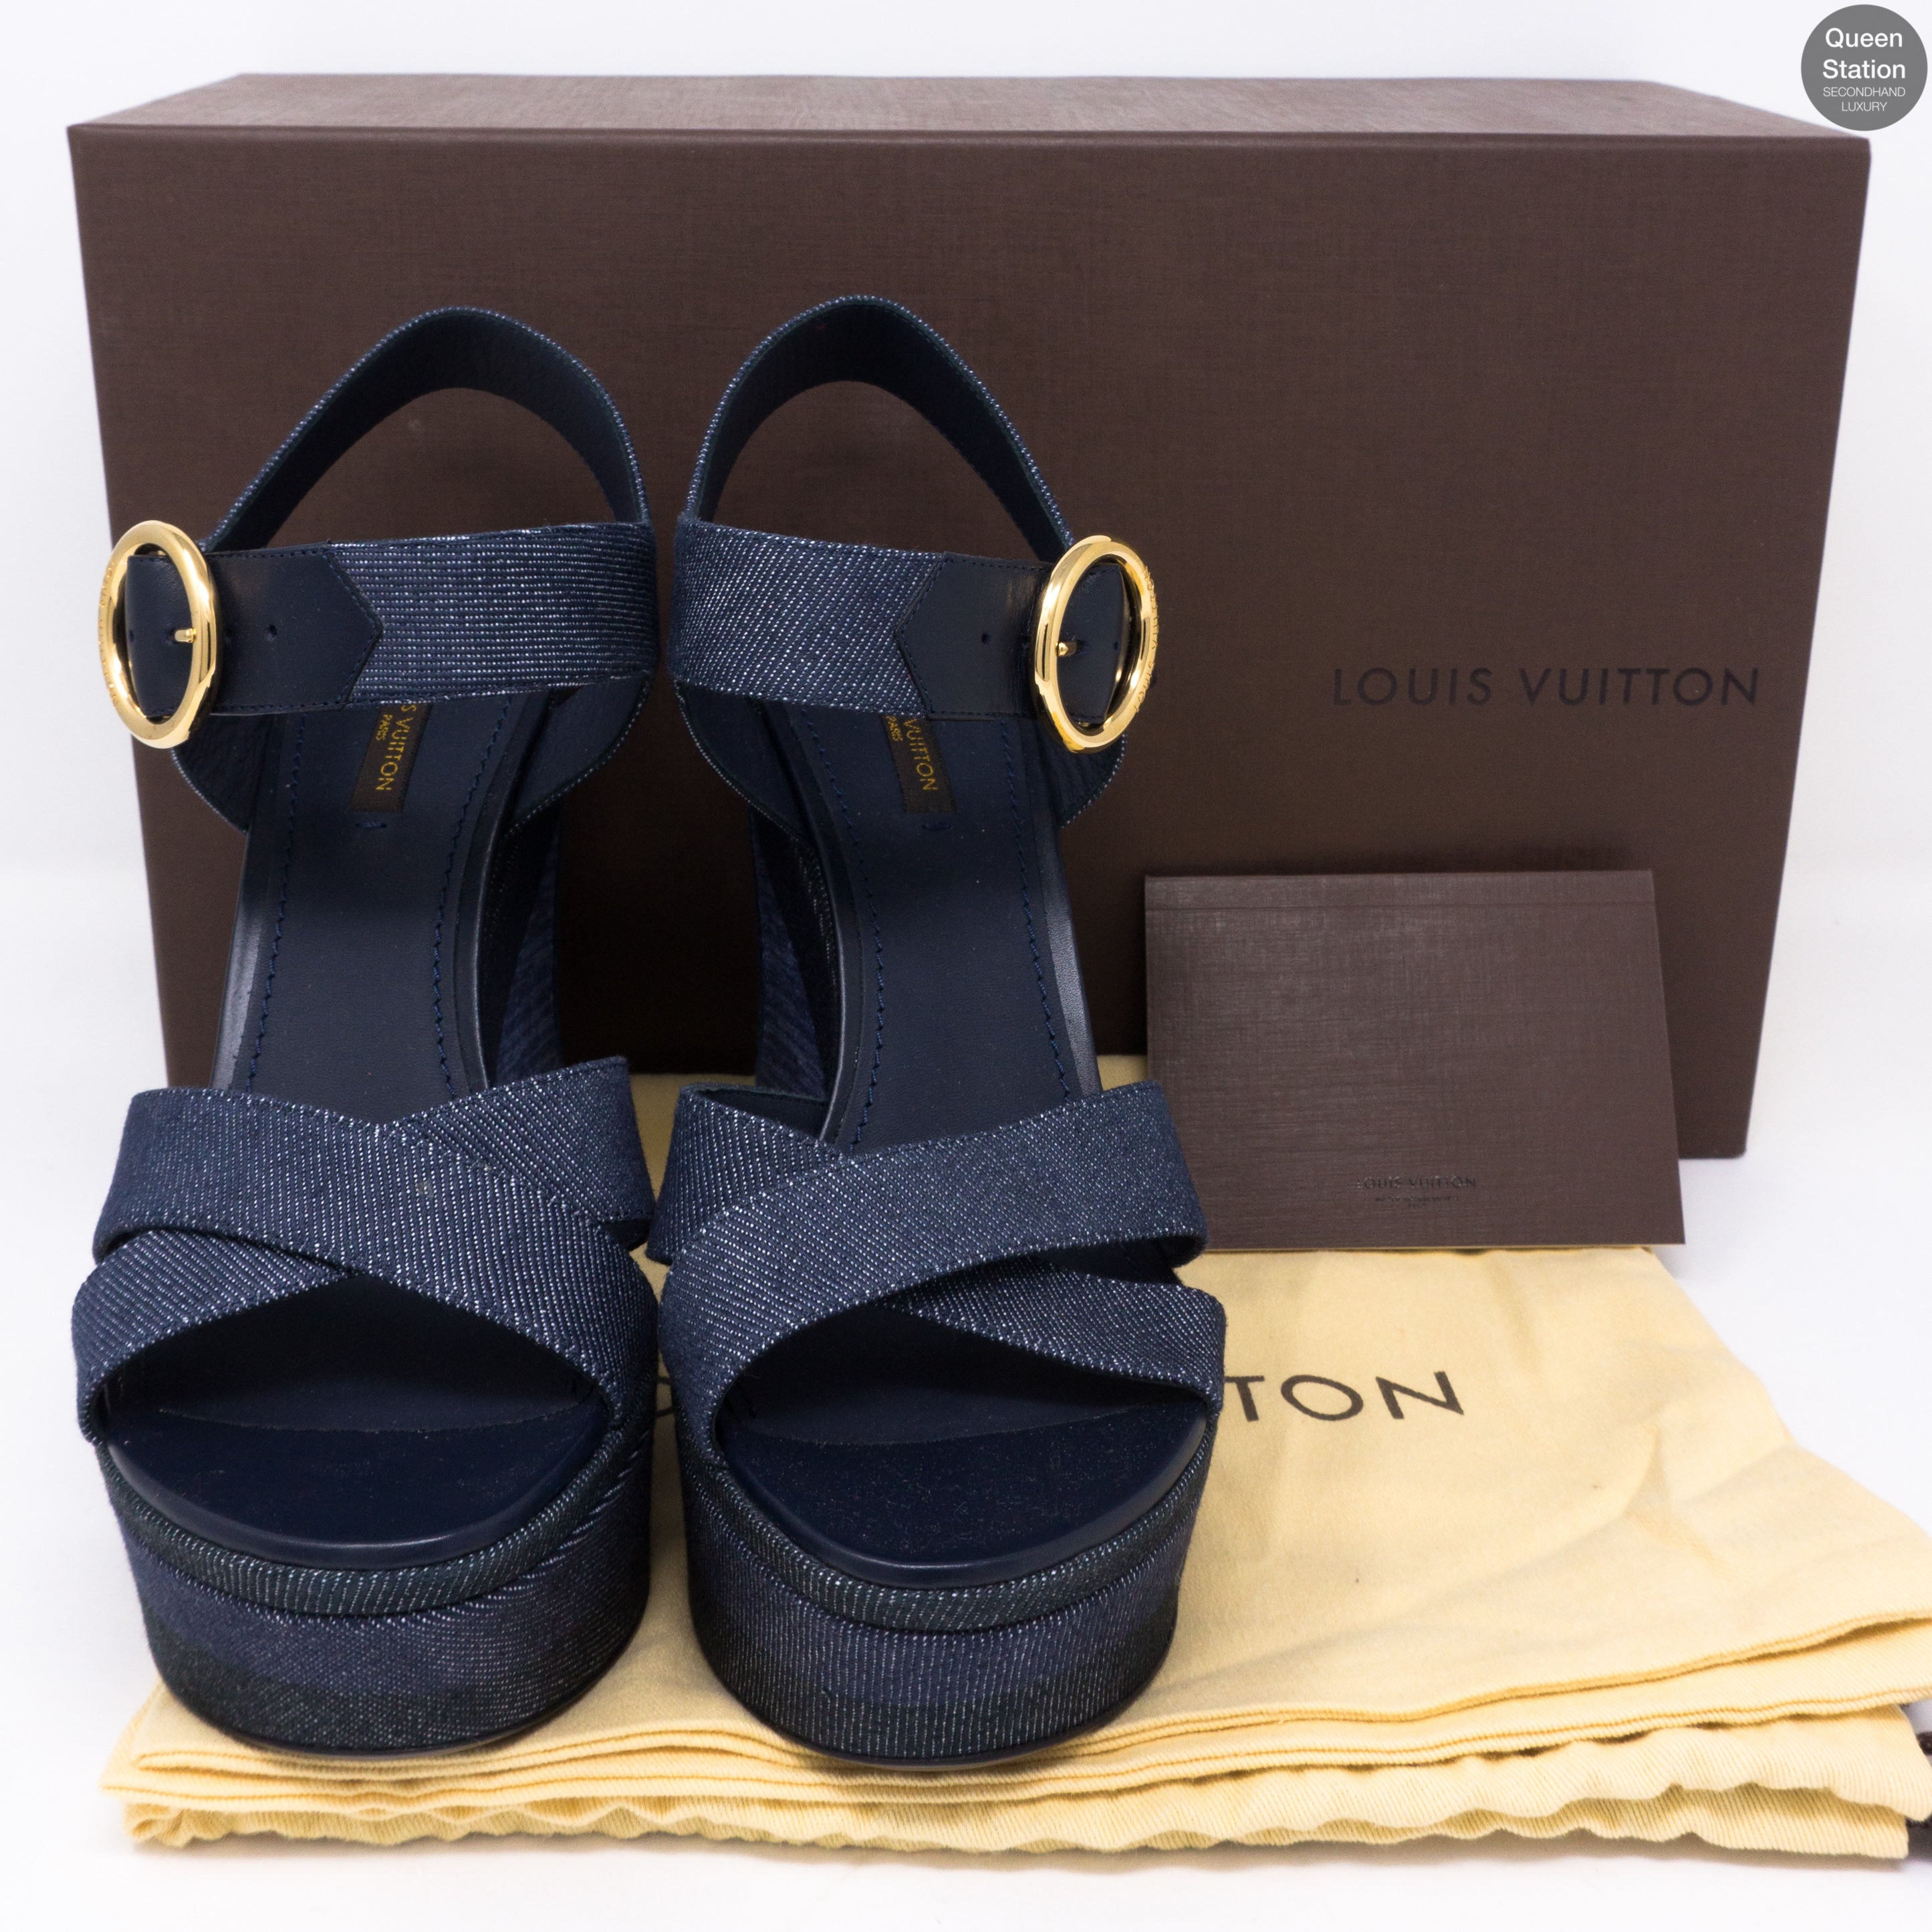 Louis Vuitton – Denim Shore Wedge Sandals – Queen Station